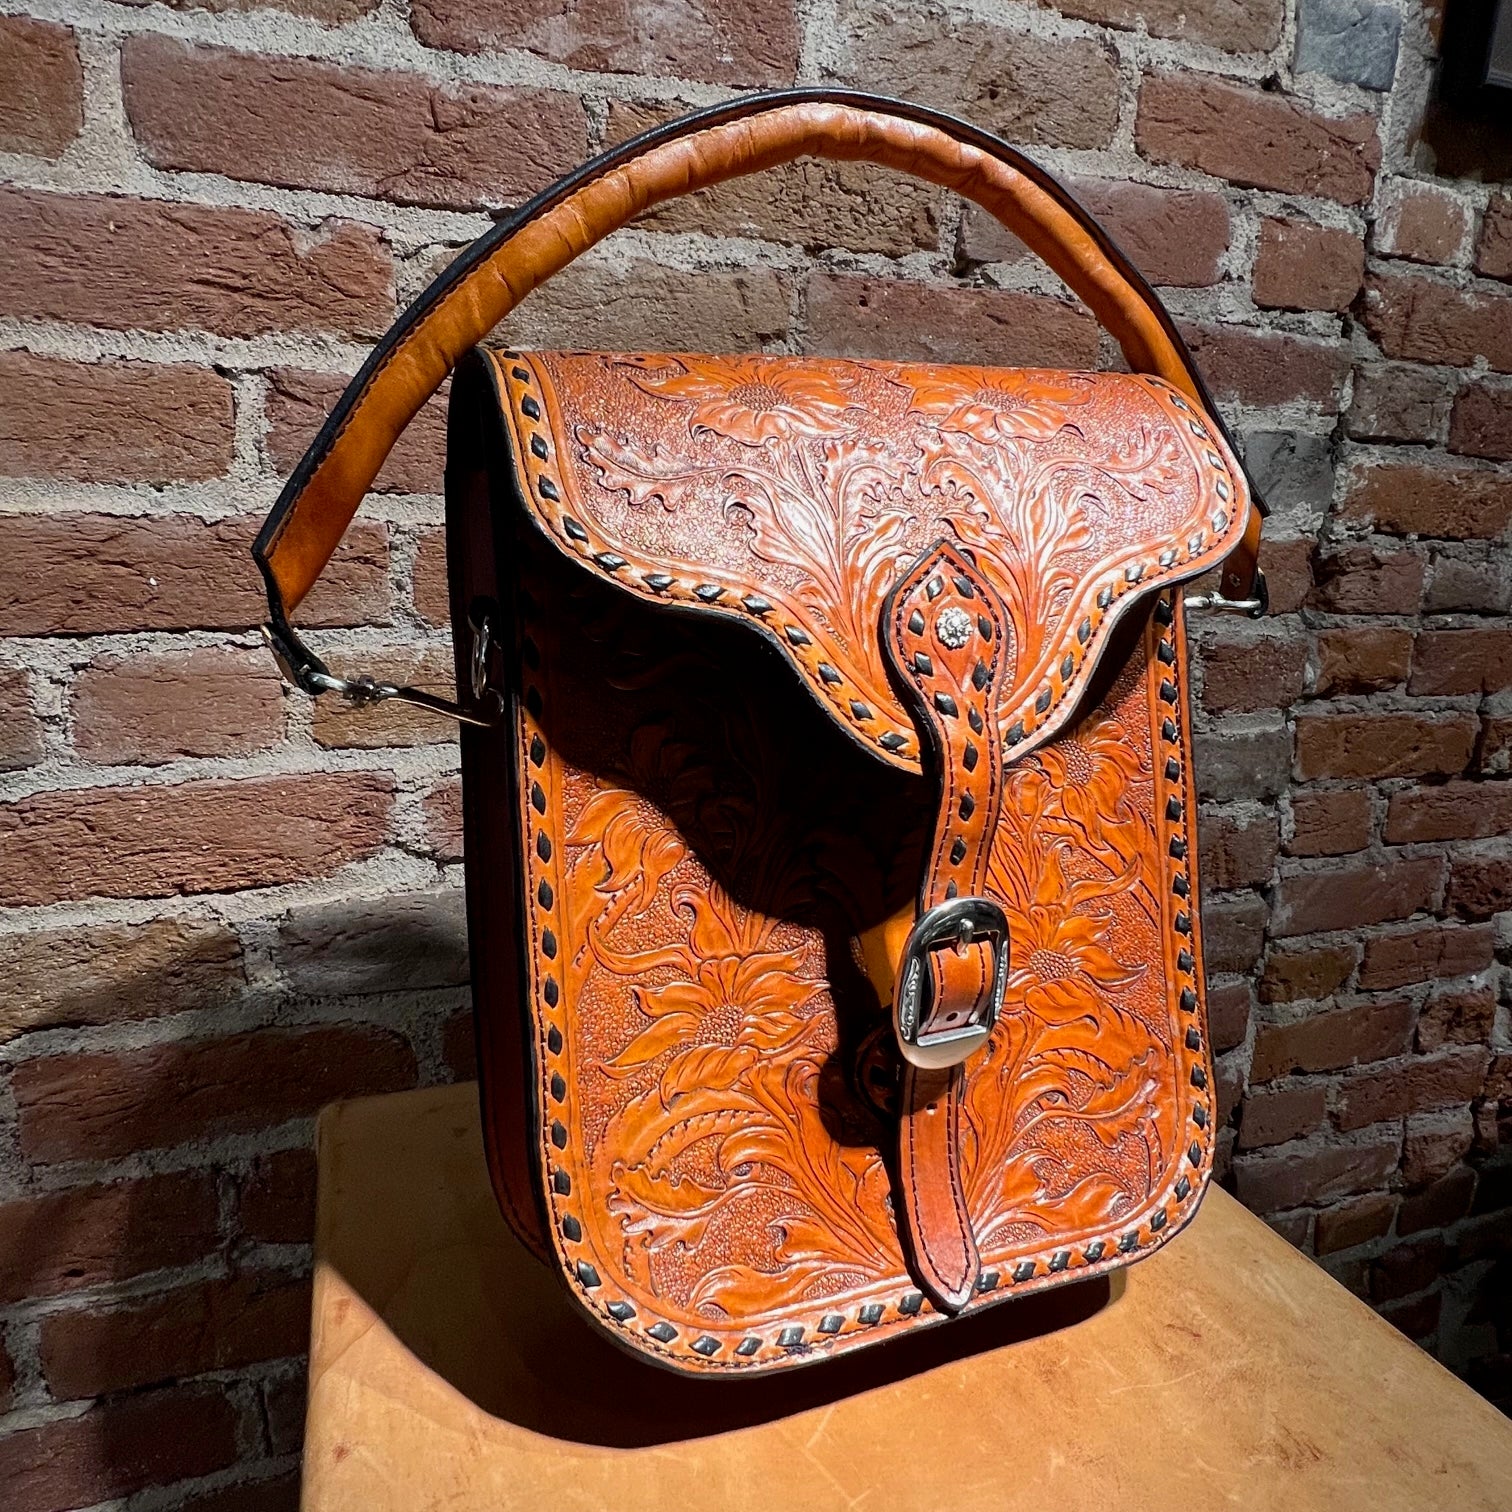 Western Leather Saddle Purse/Bag Tan One-Of-A-Kind Hand Made | eBay